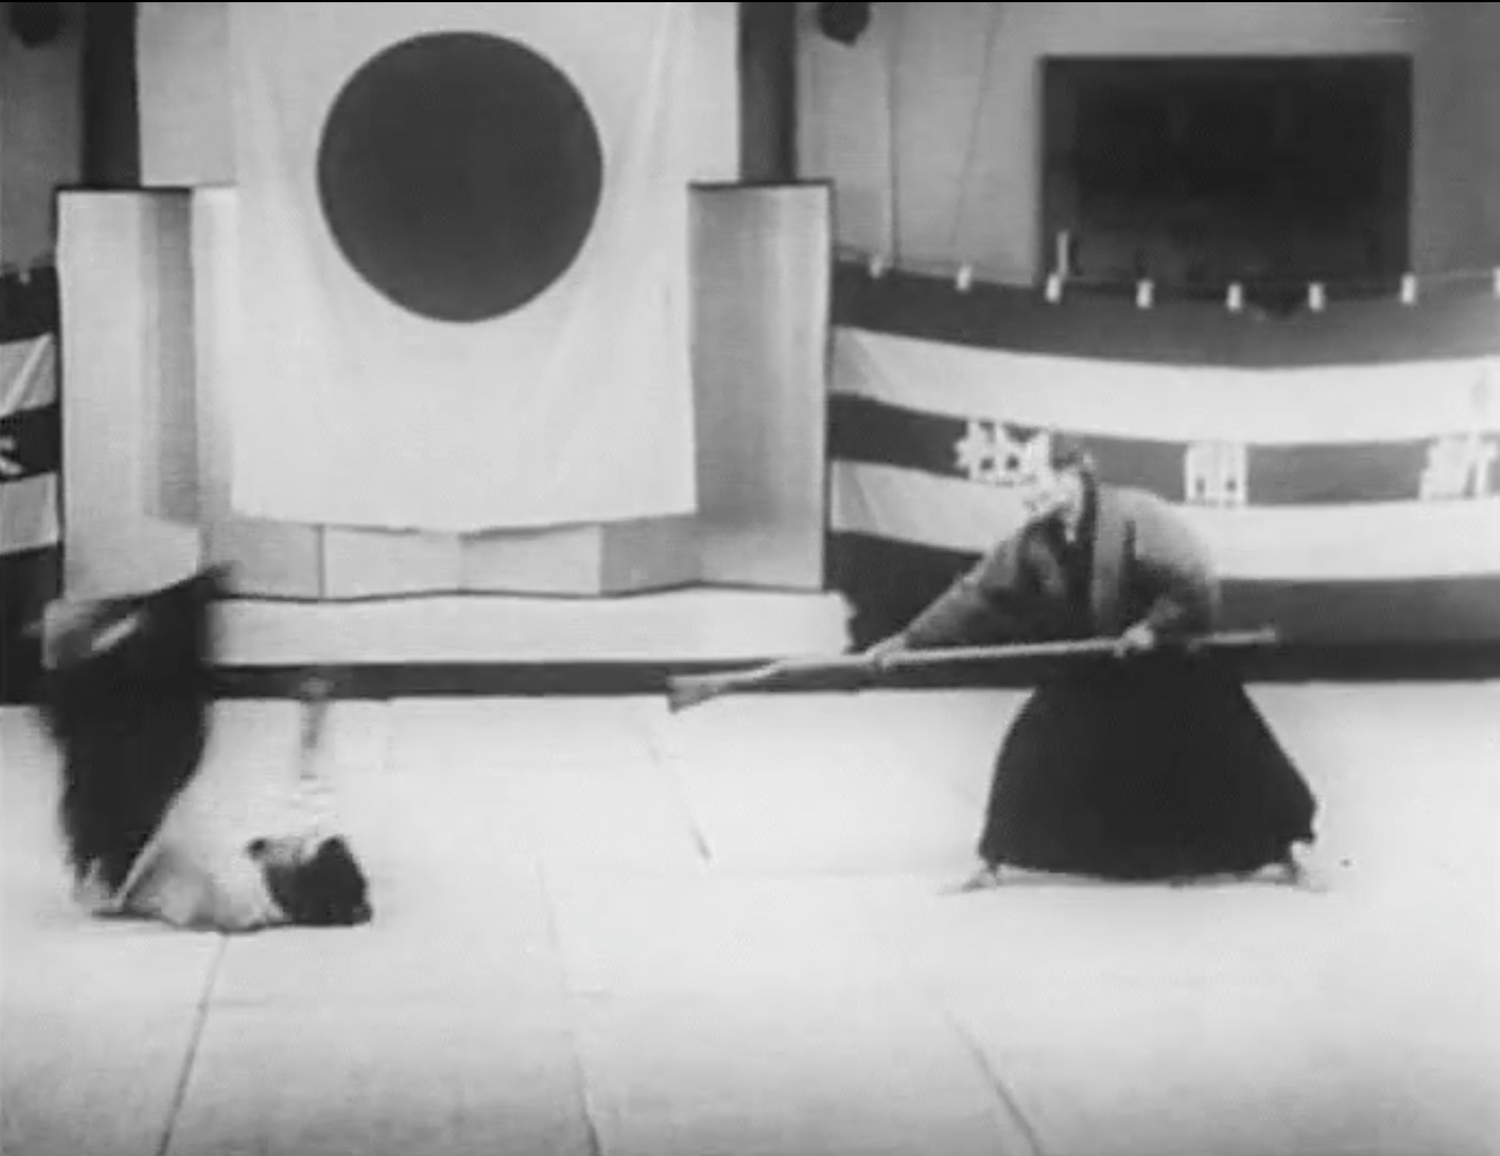 Morihei Ueshiba & Aikido Complete 6 Vol Series